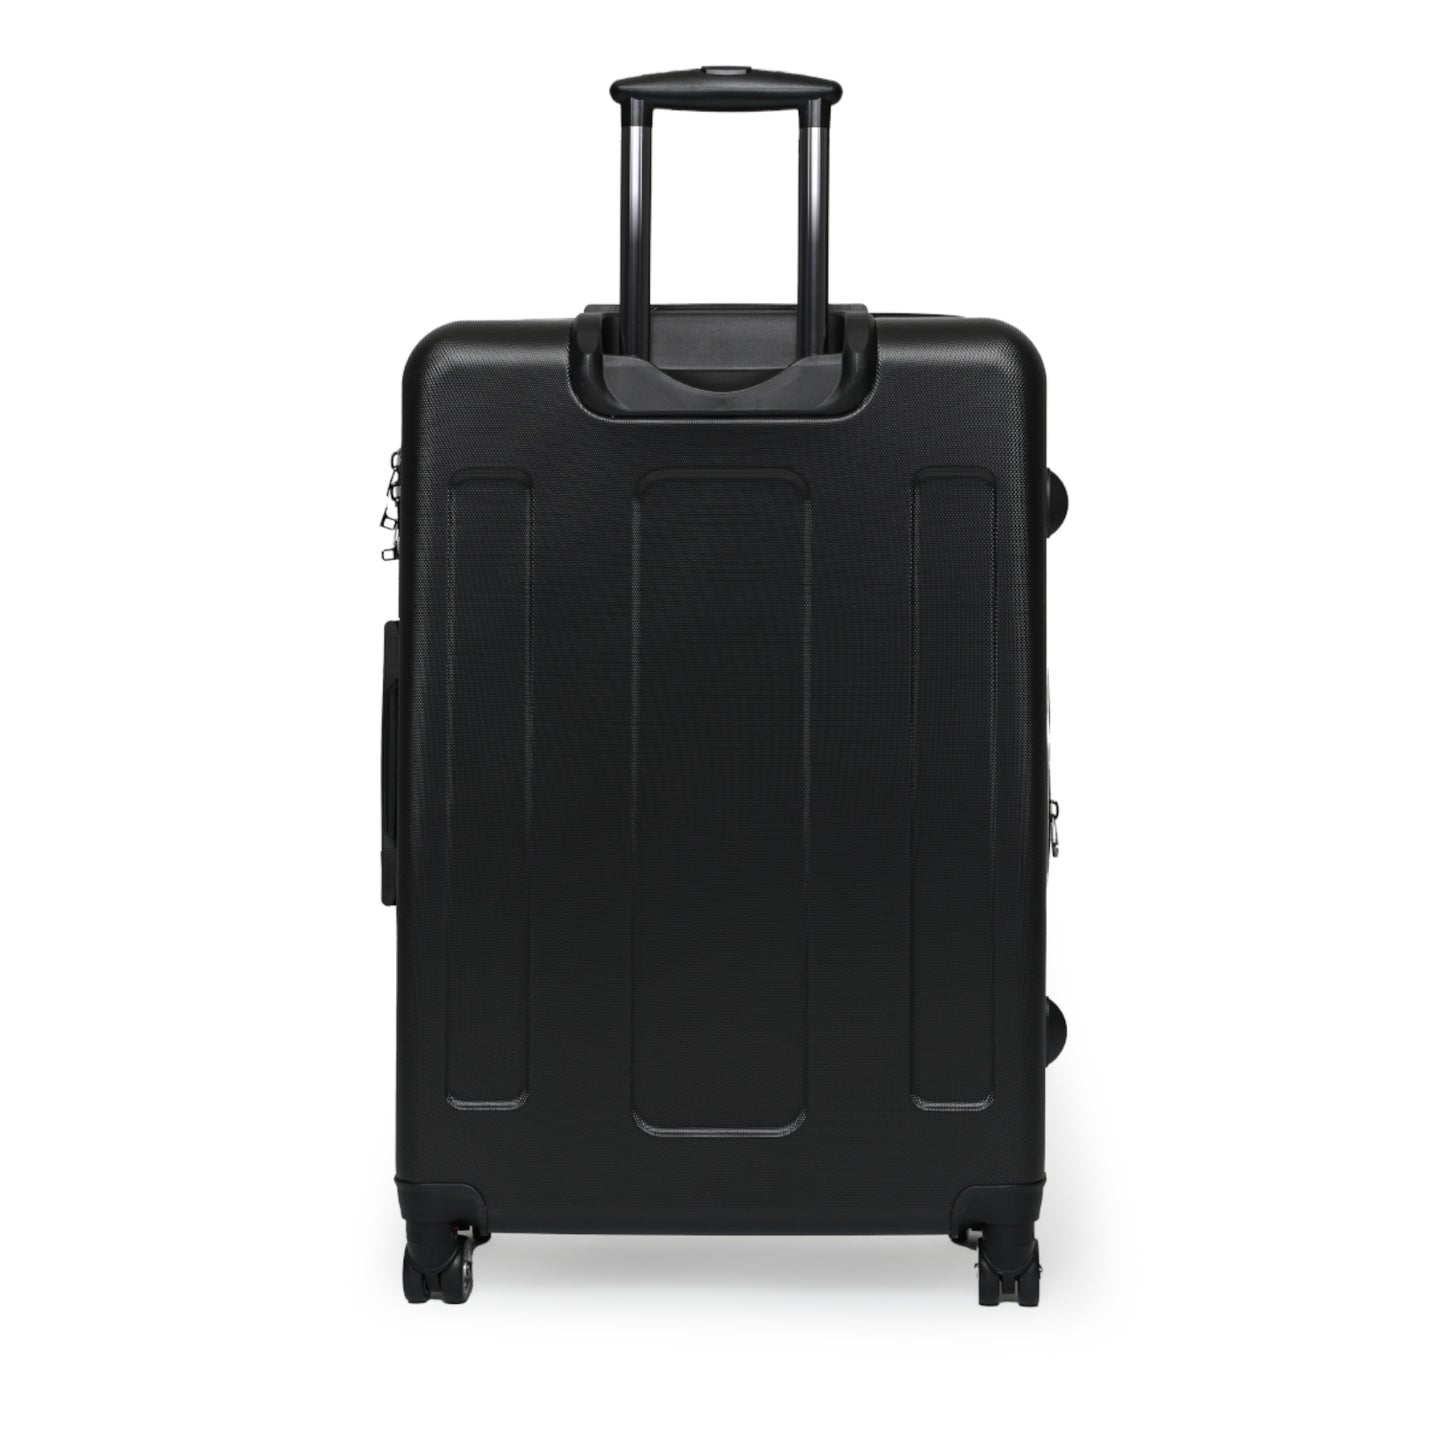 Suitcase (Samhain Dream Thaw 15 Orange Logo@Alchemic) RJSTHs2023 RJS